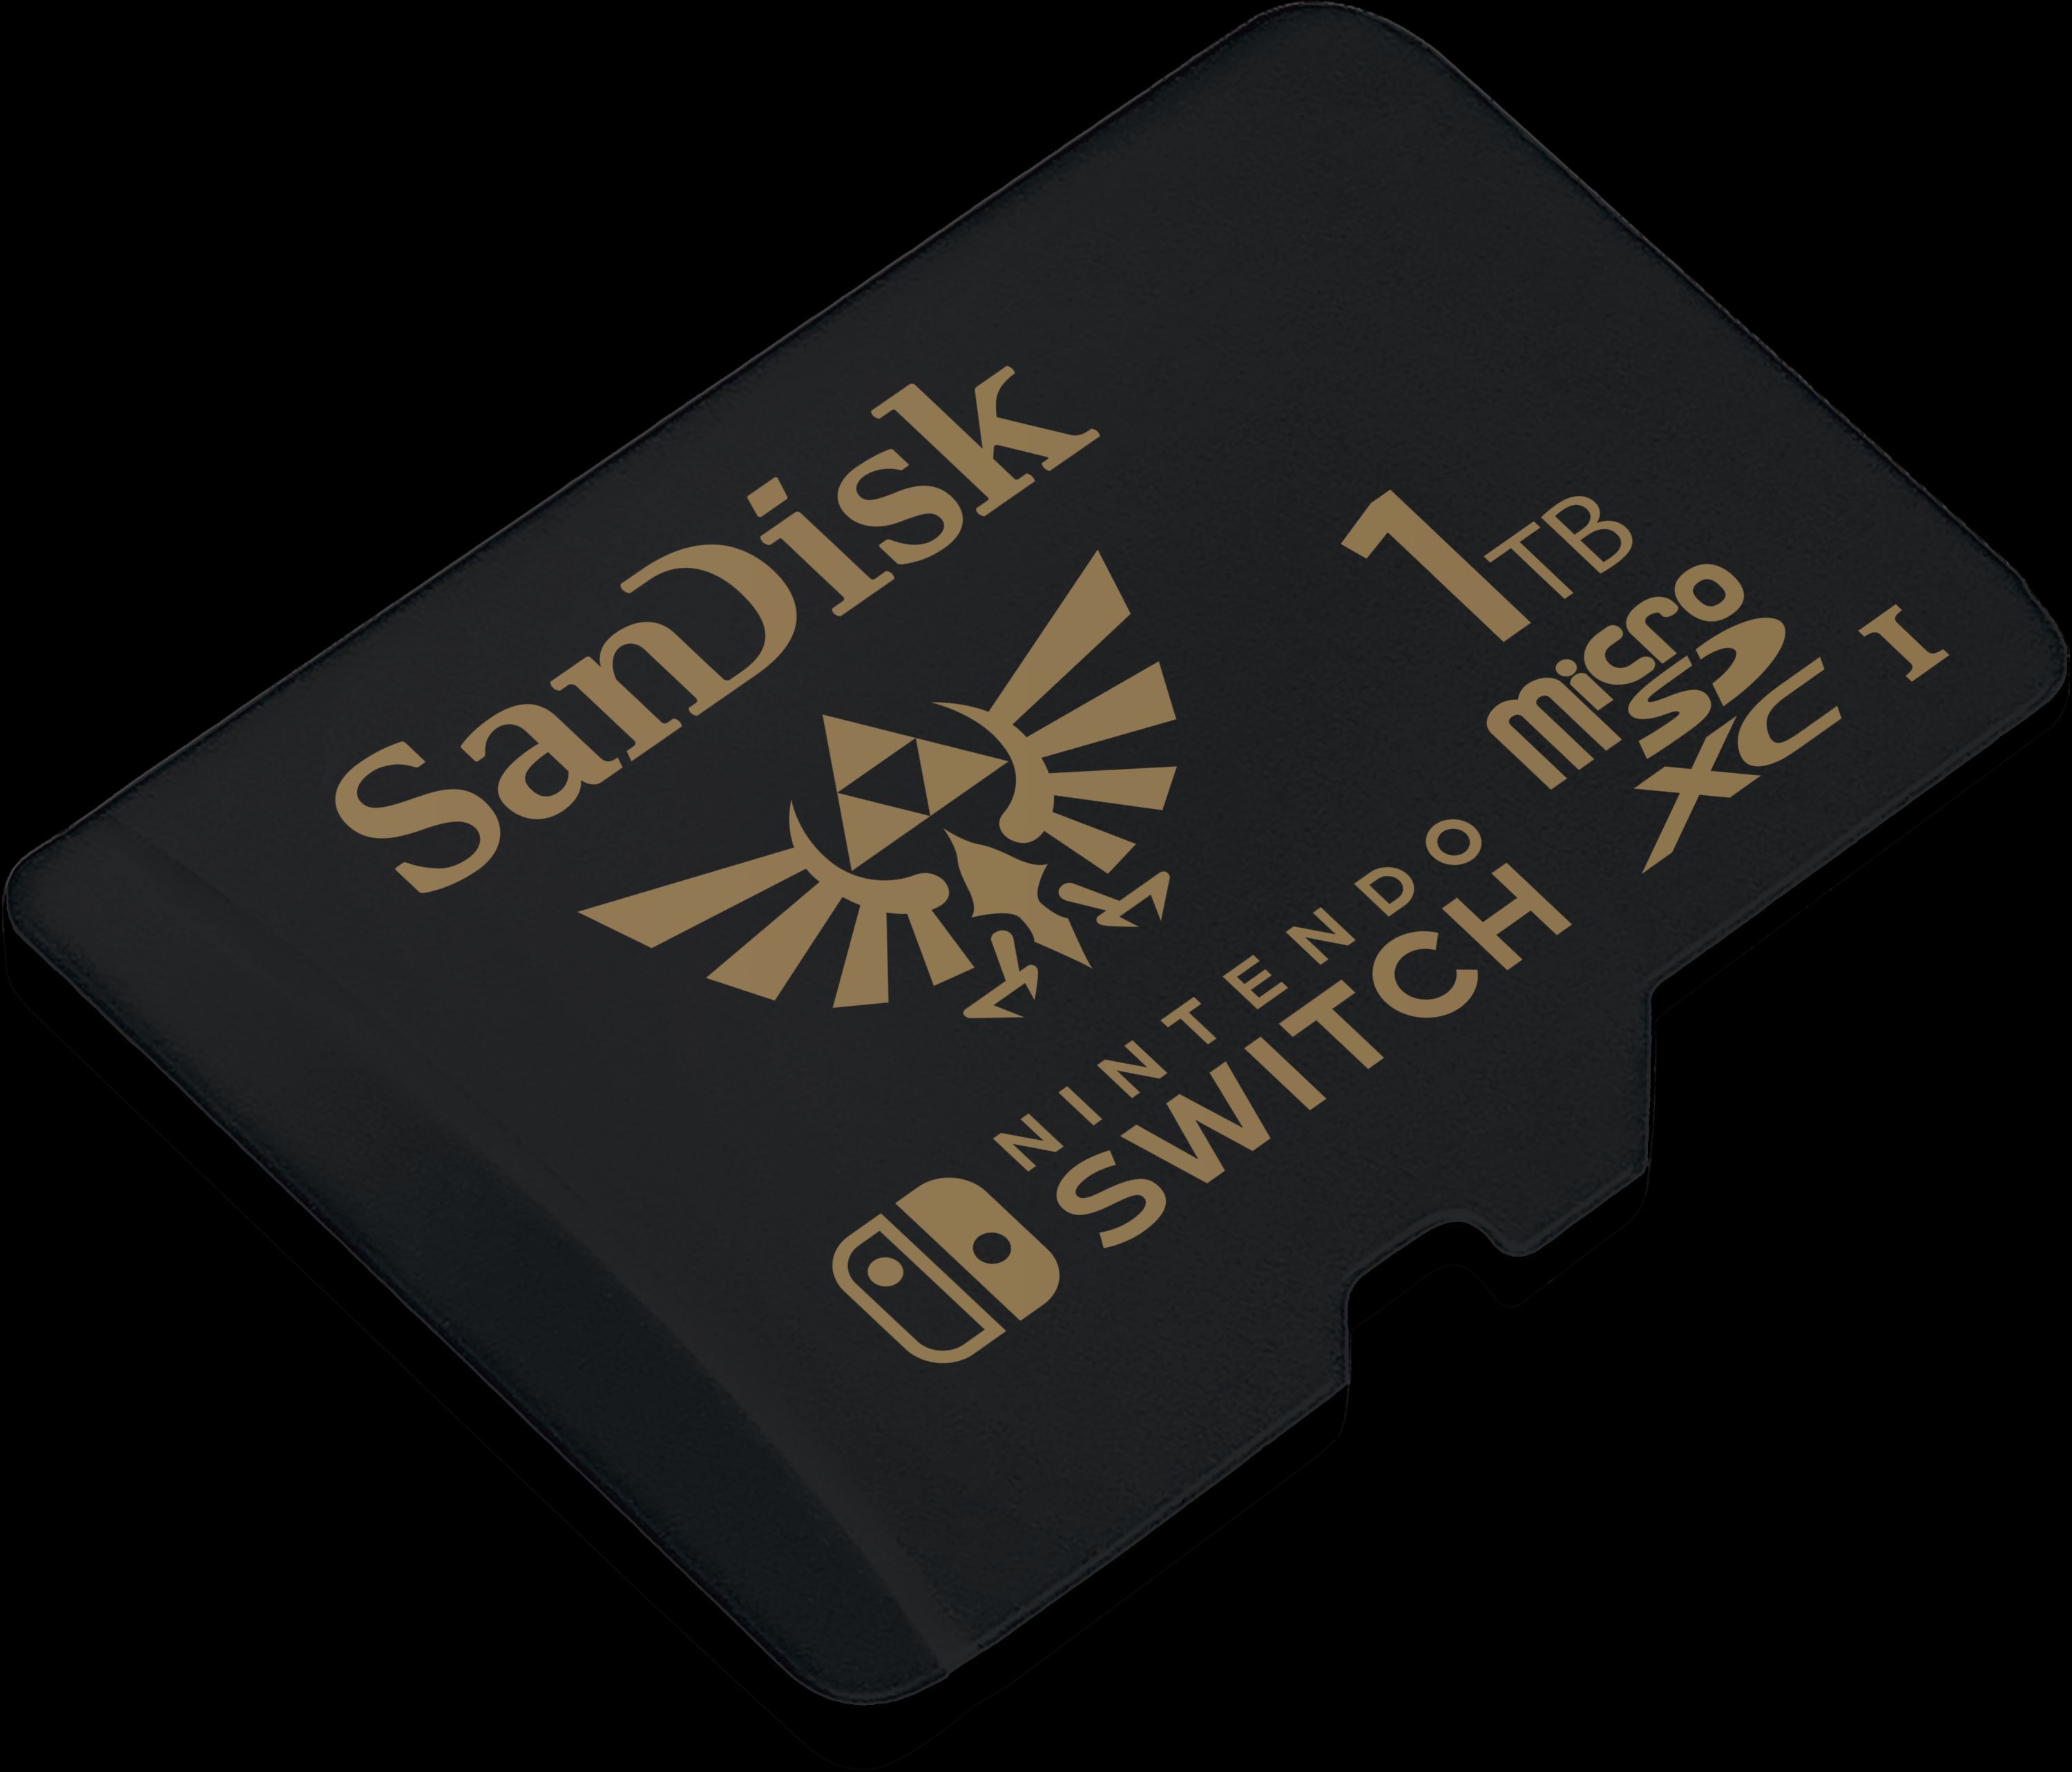 SanDisk microSDXC Nintendo Switch 1TB - engelberger ag